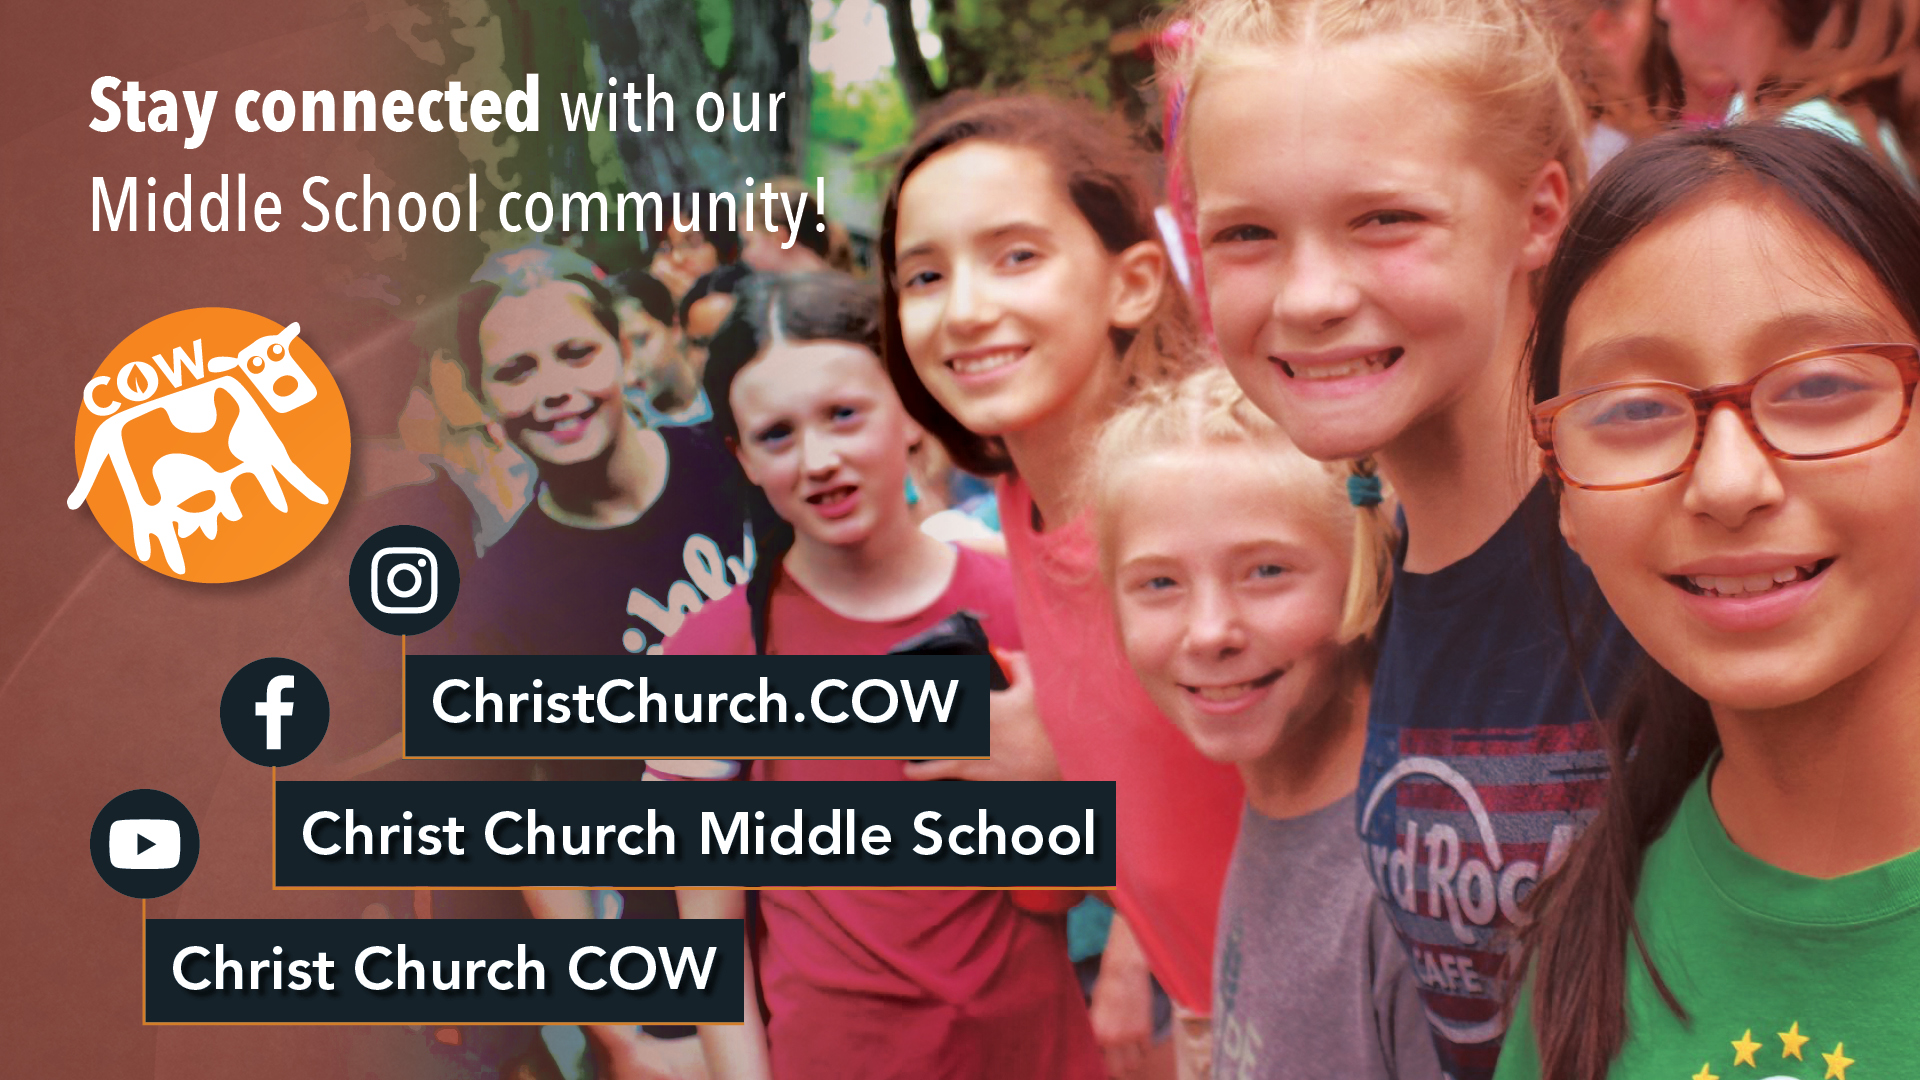 Middle School Ministry
Wednesdays | 7:00–8:45 p.m. | Oak Brook
Sundays | 9:00 & 10:45 a.m. | Oak Brook
